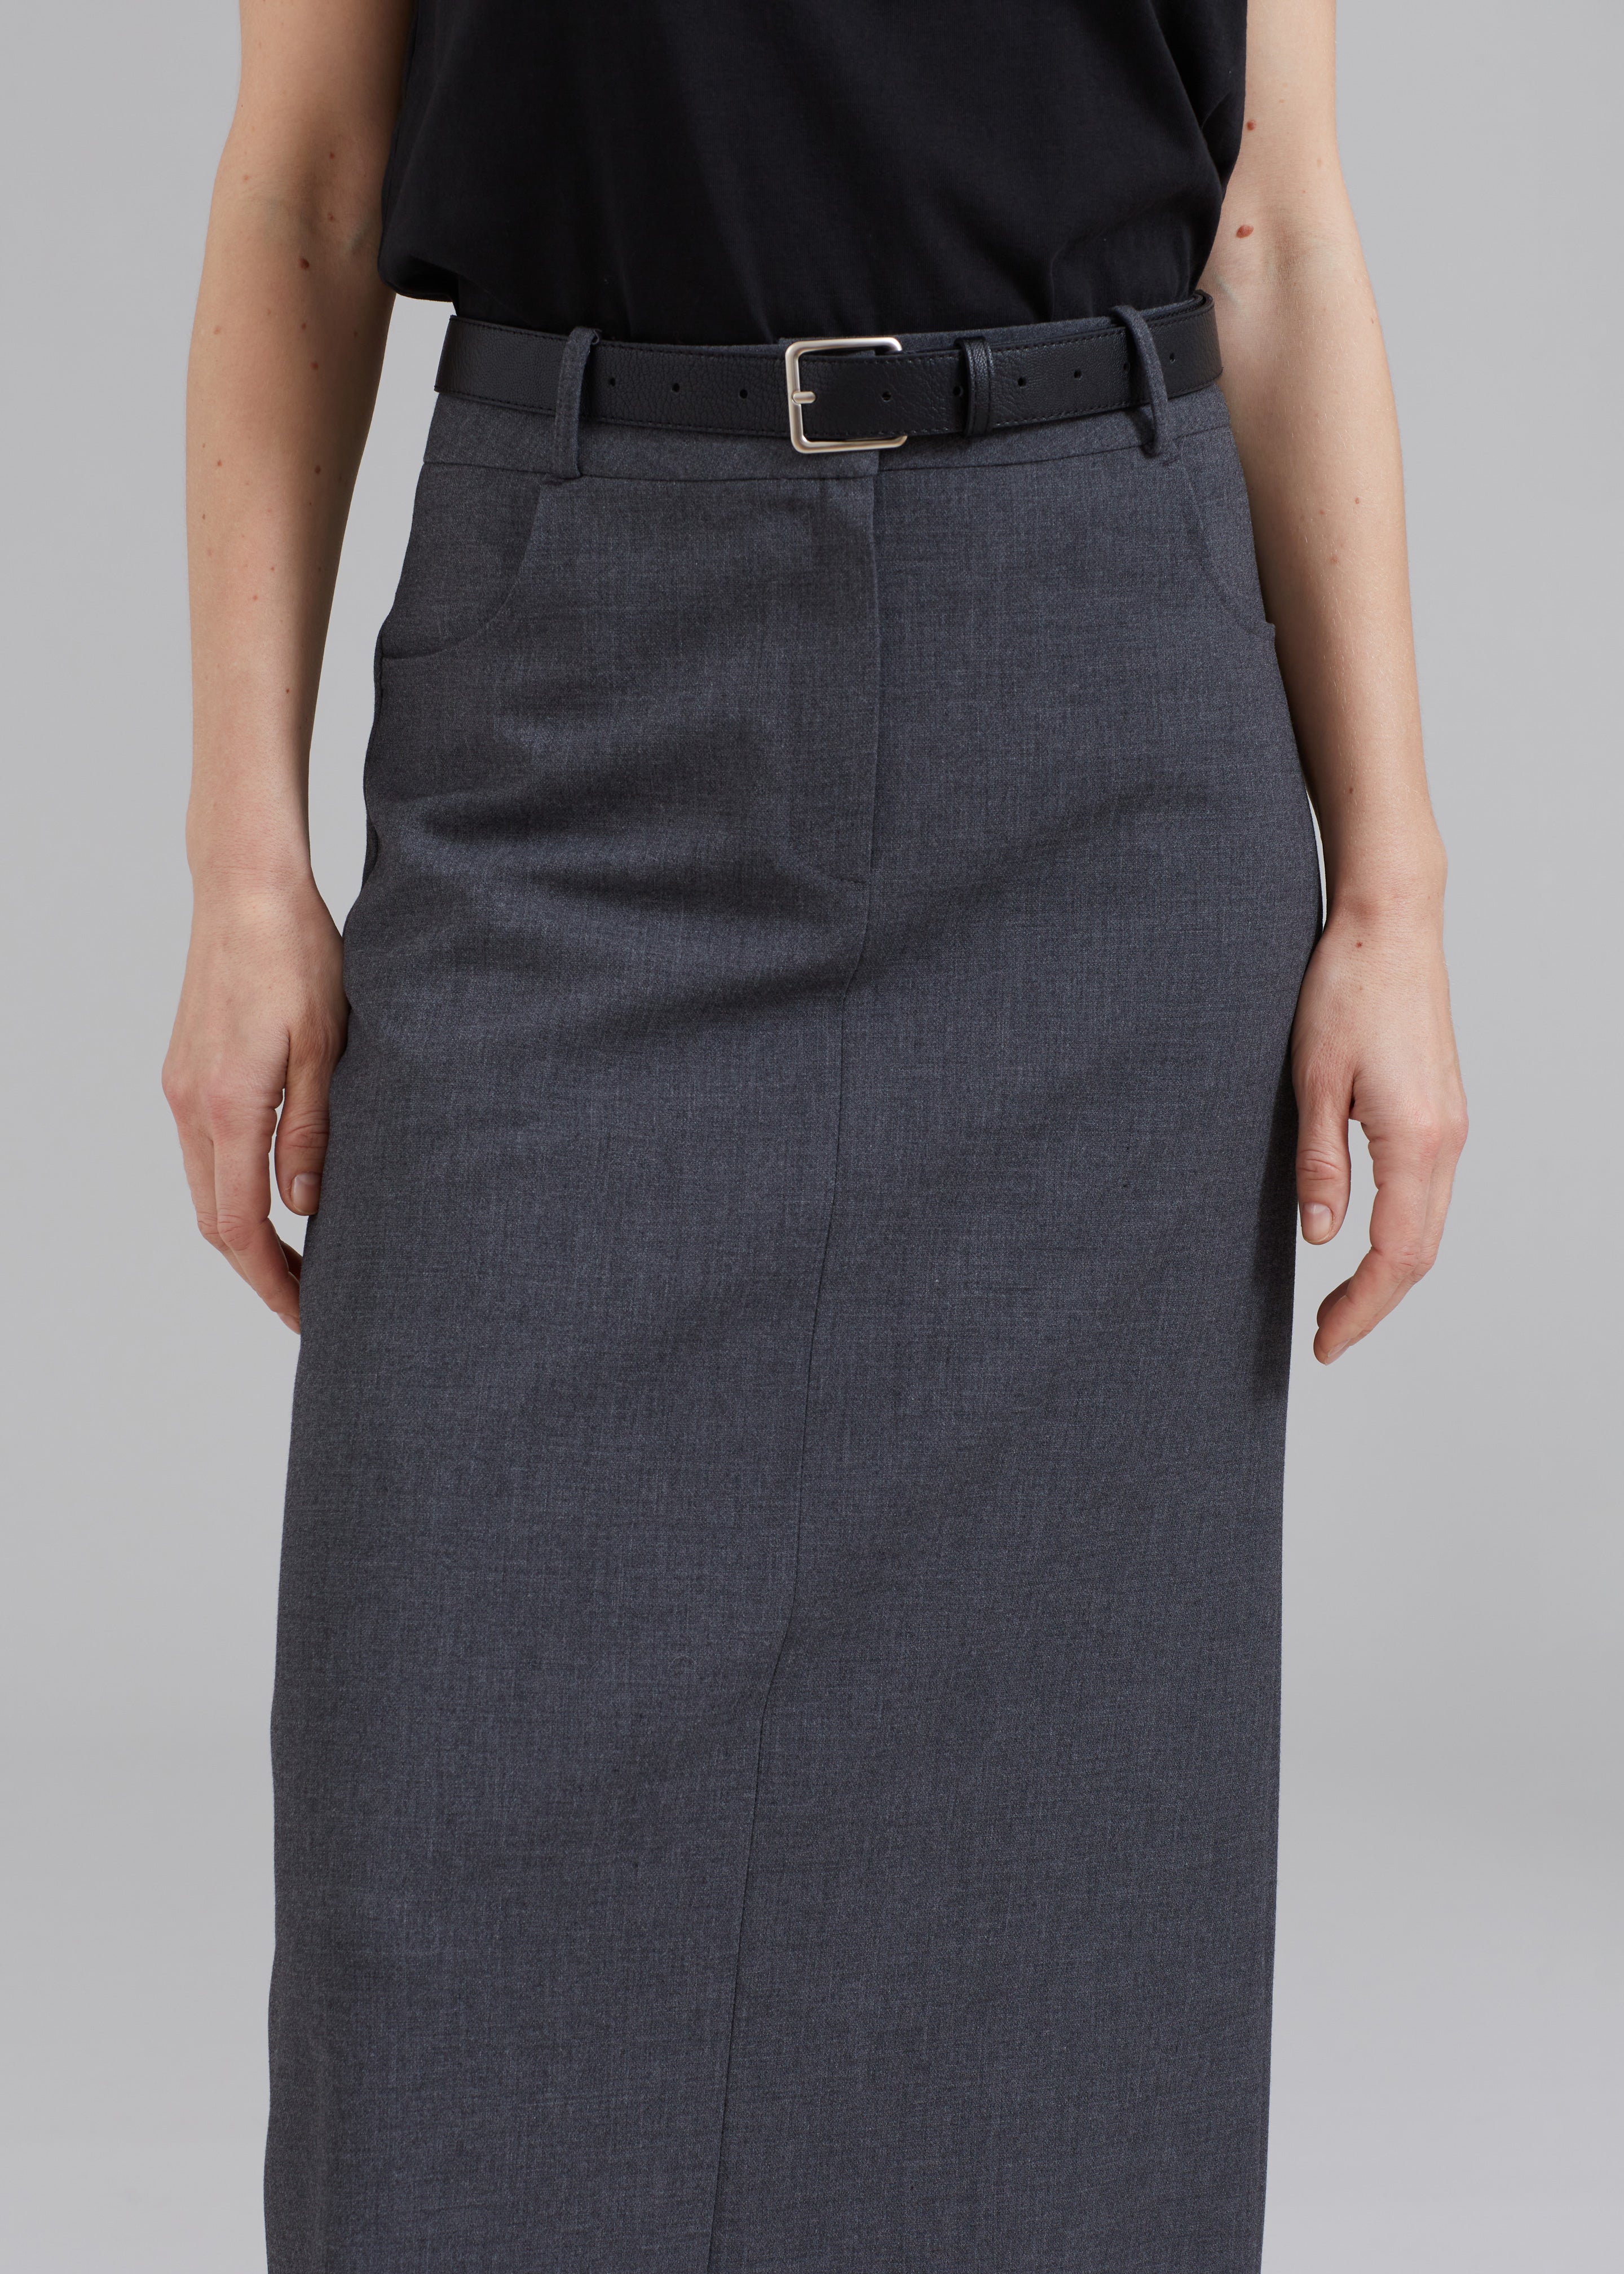 Malvo Long Pencil Skirt - Charcoal - 3